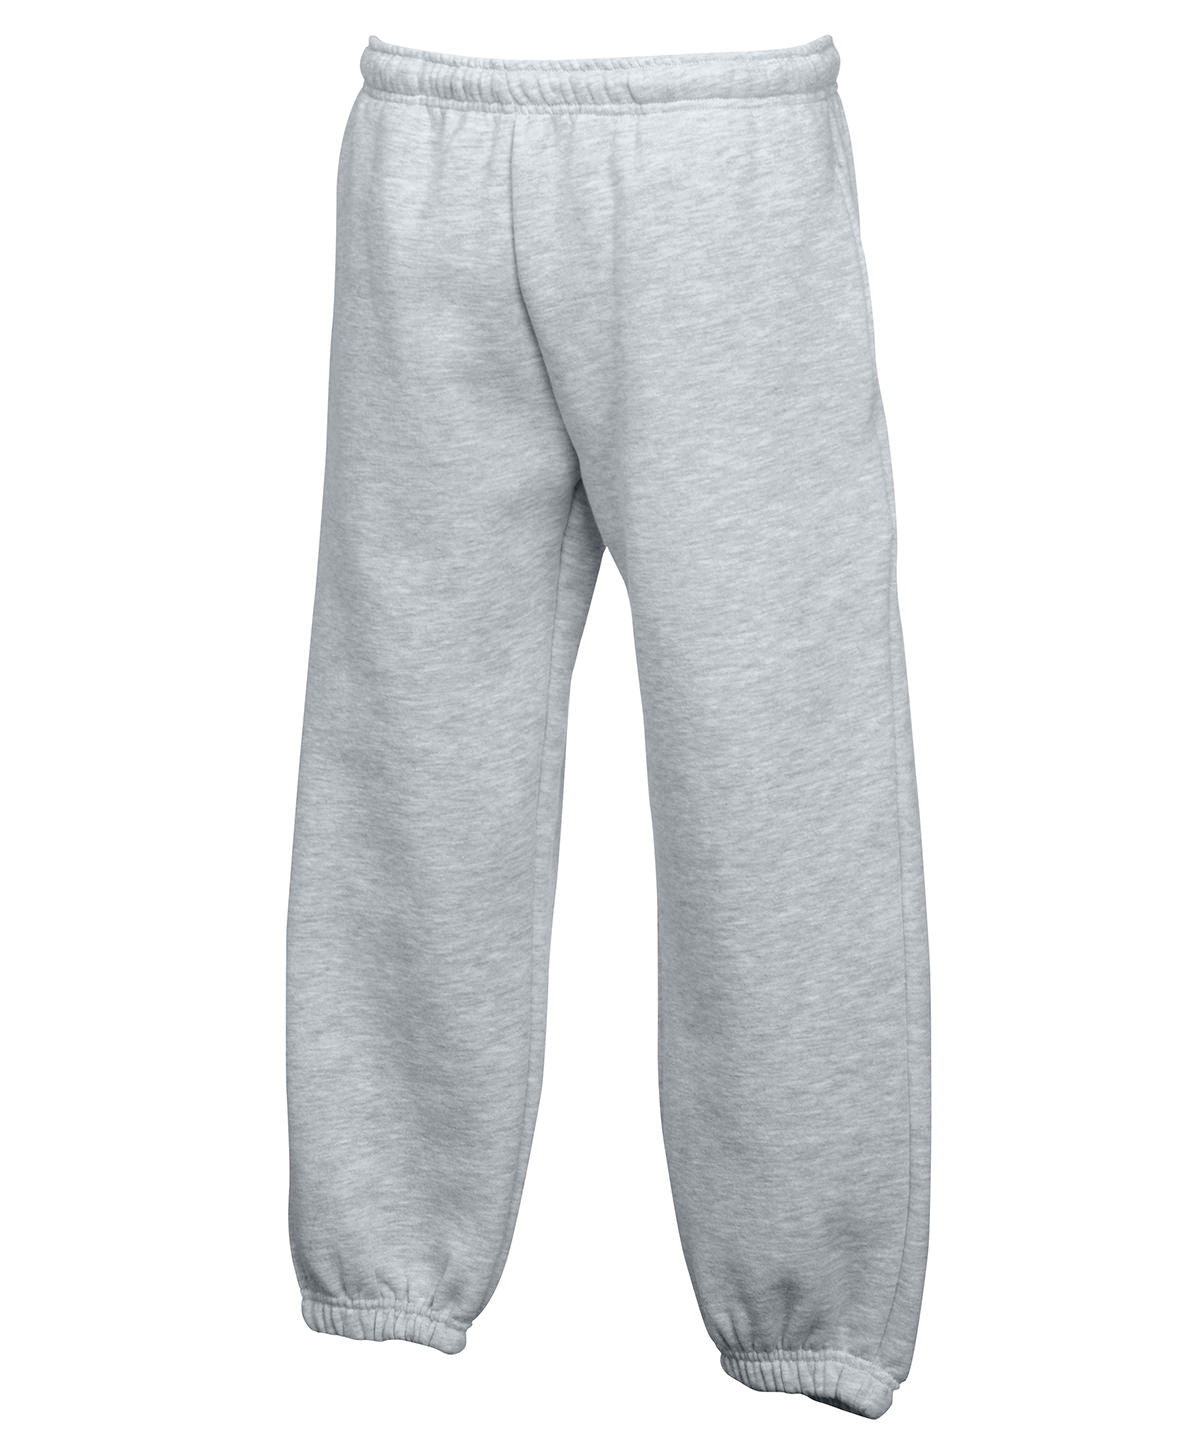 Joggingbuxur - Kids Premium Elasticated Cuff Jog Pants